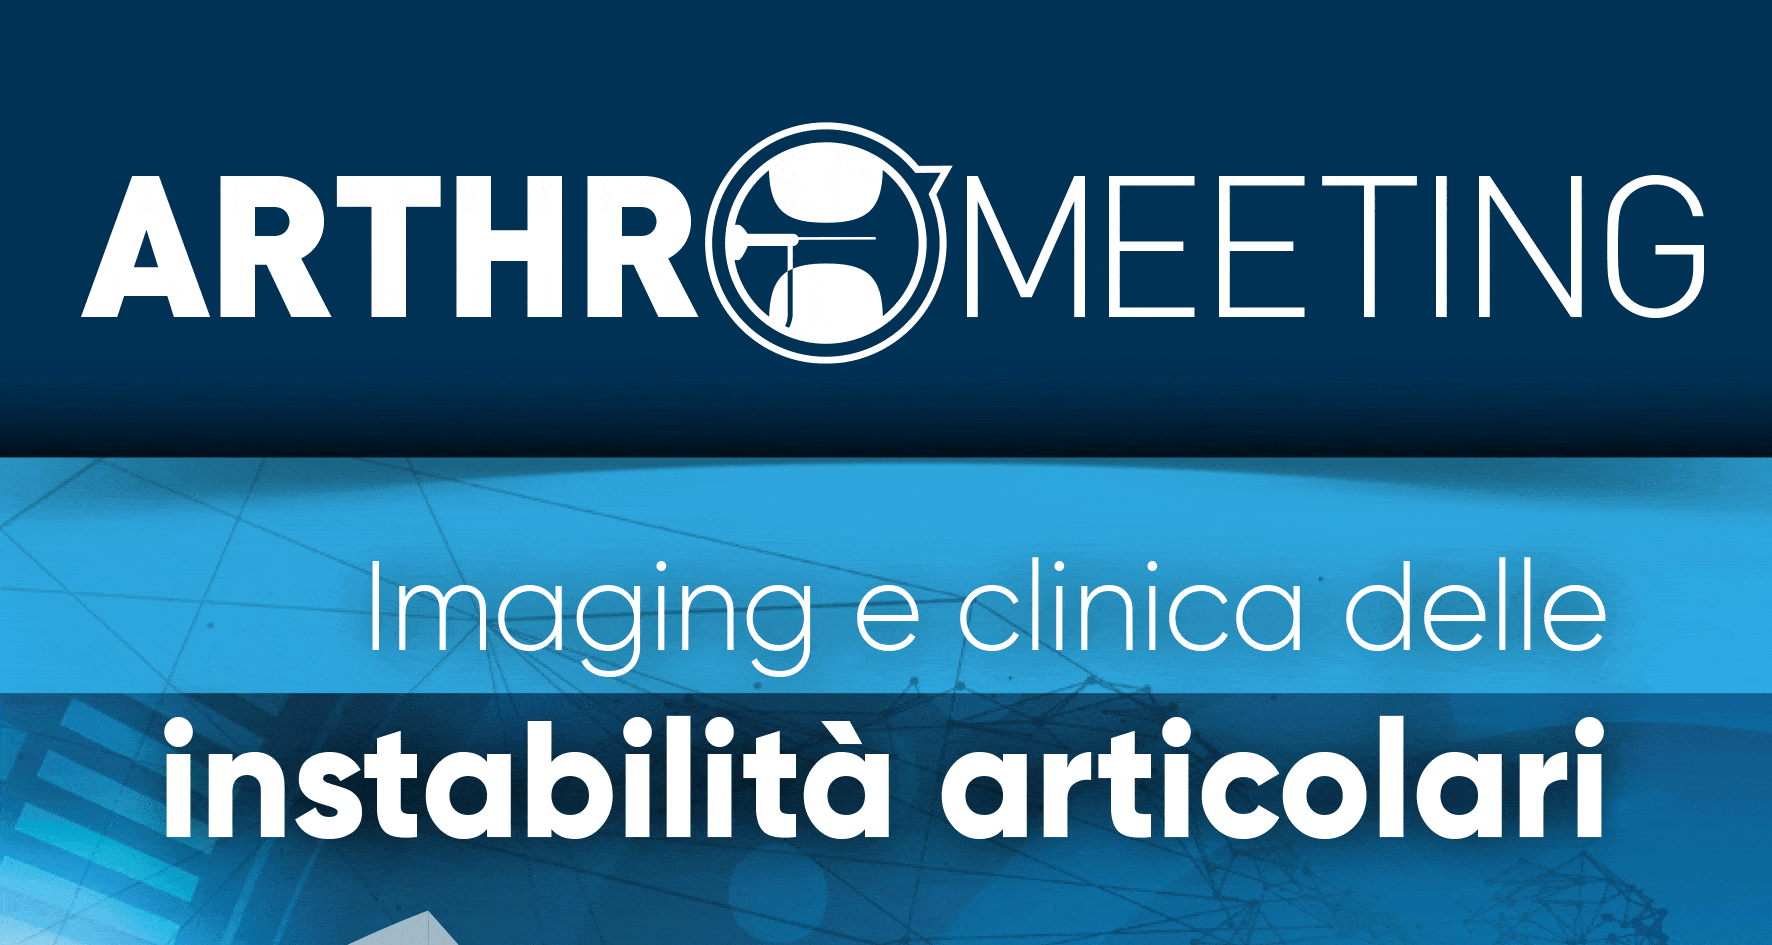 ARTHR MEETING - Convegno artroscopia 2019